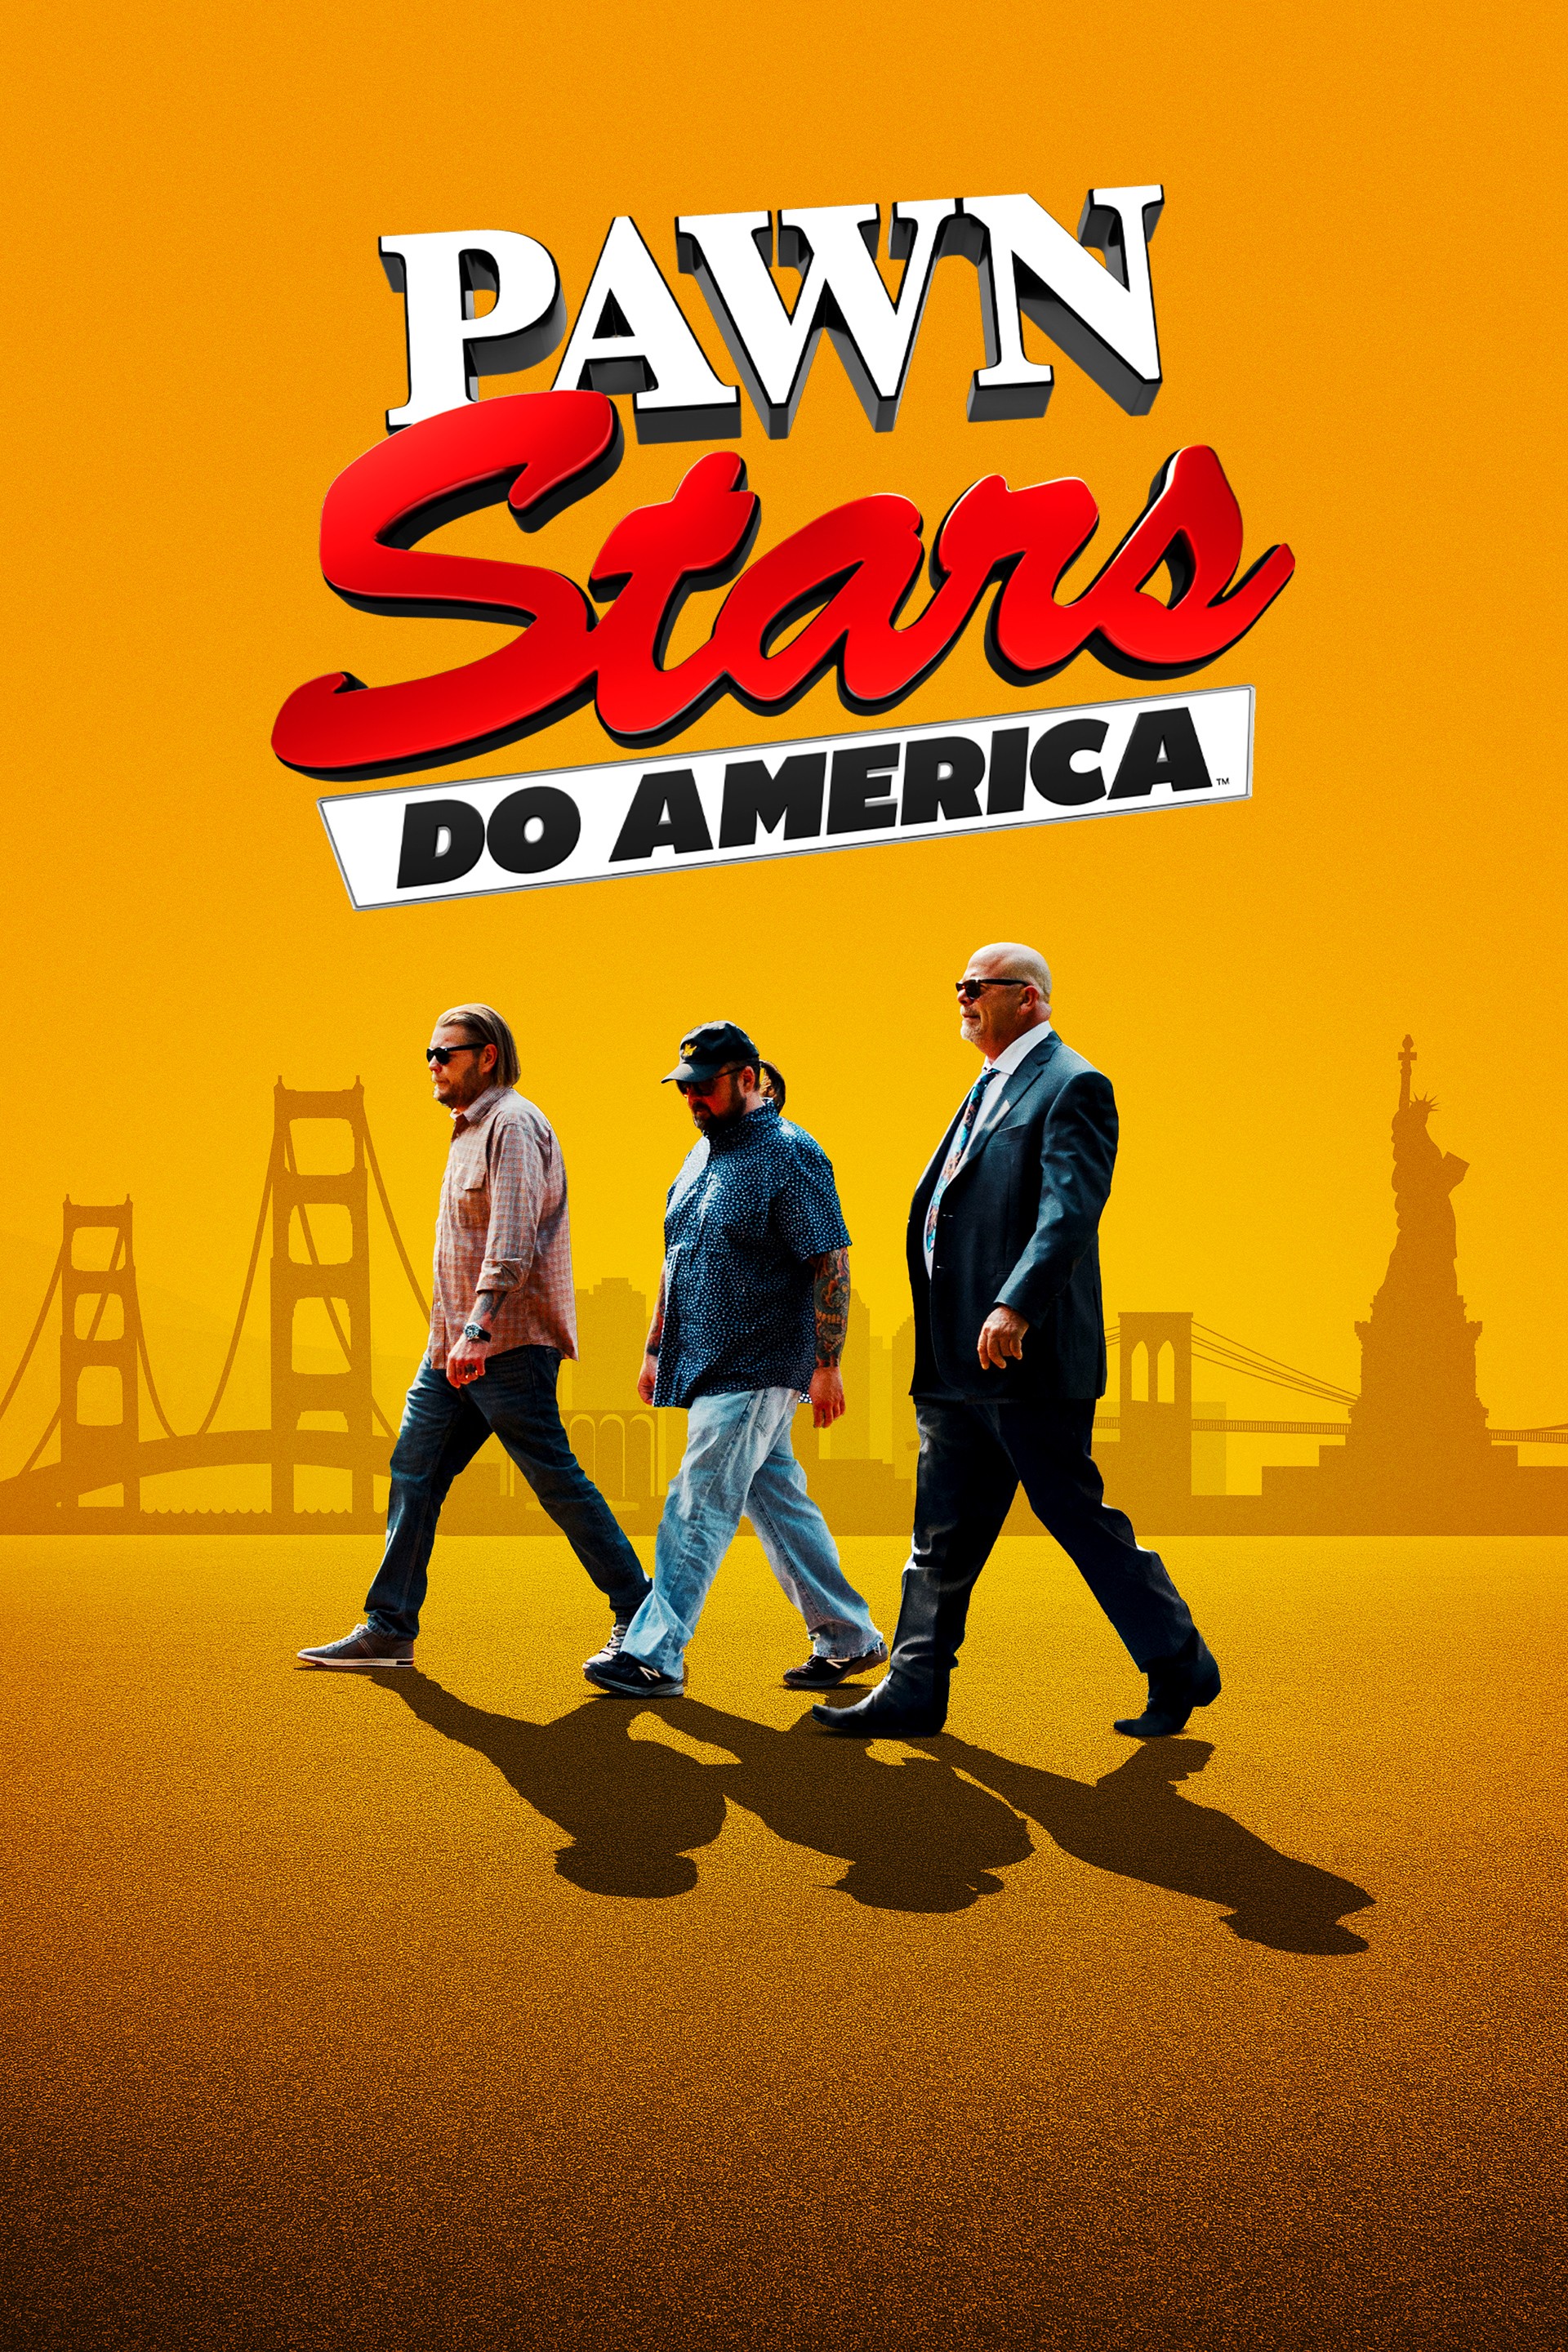 Pawn Stars Do America (TV Series 2022– ) - IMDb